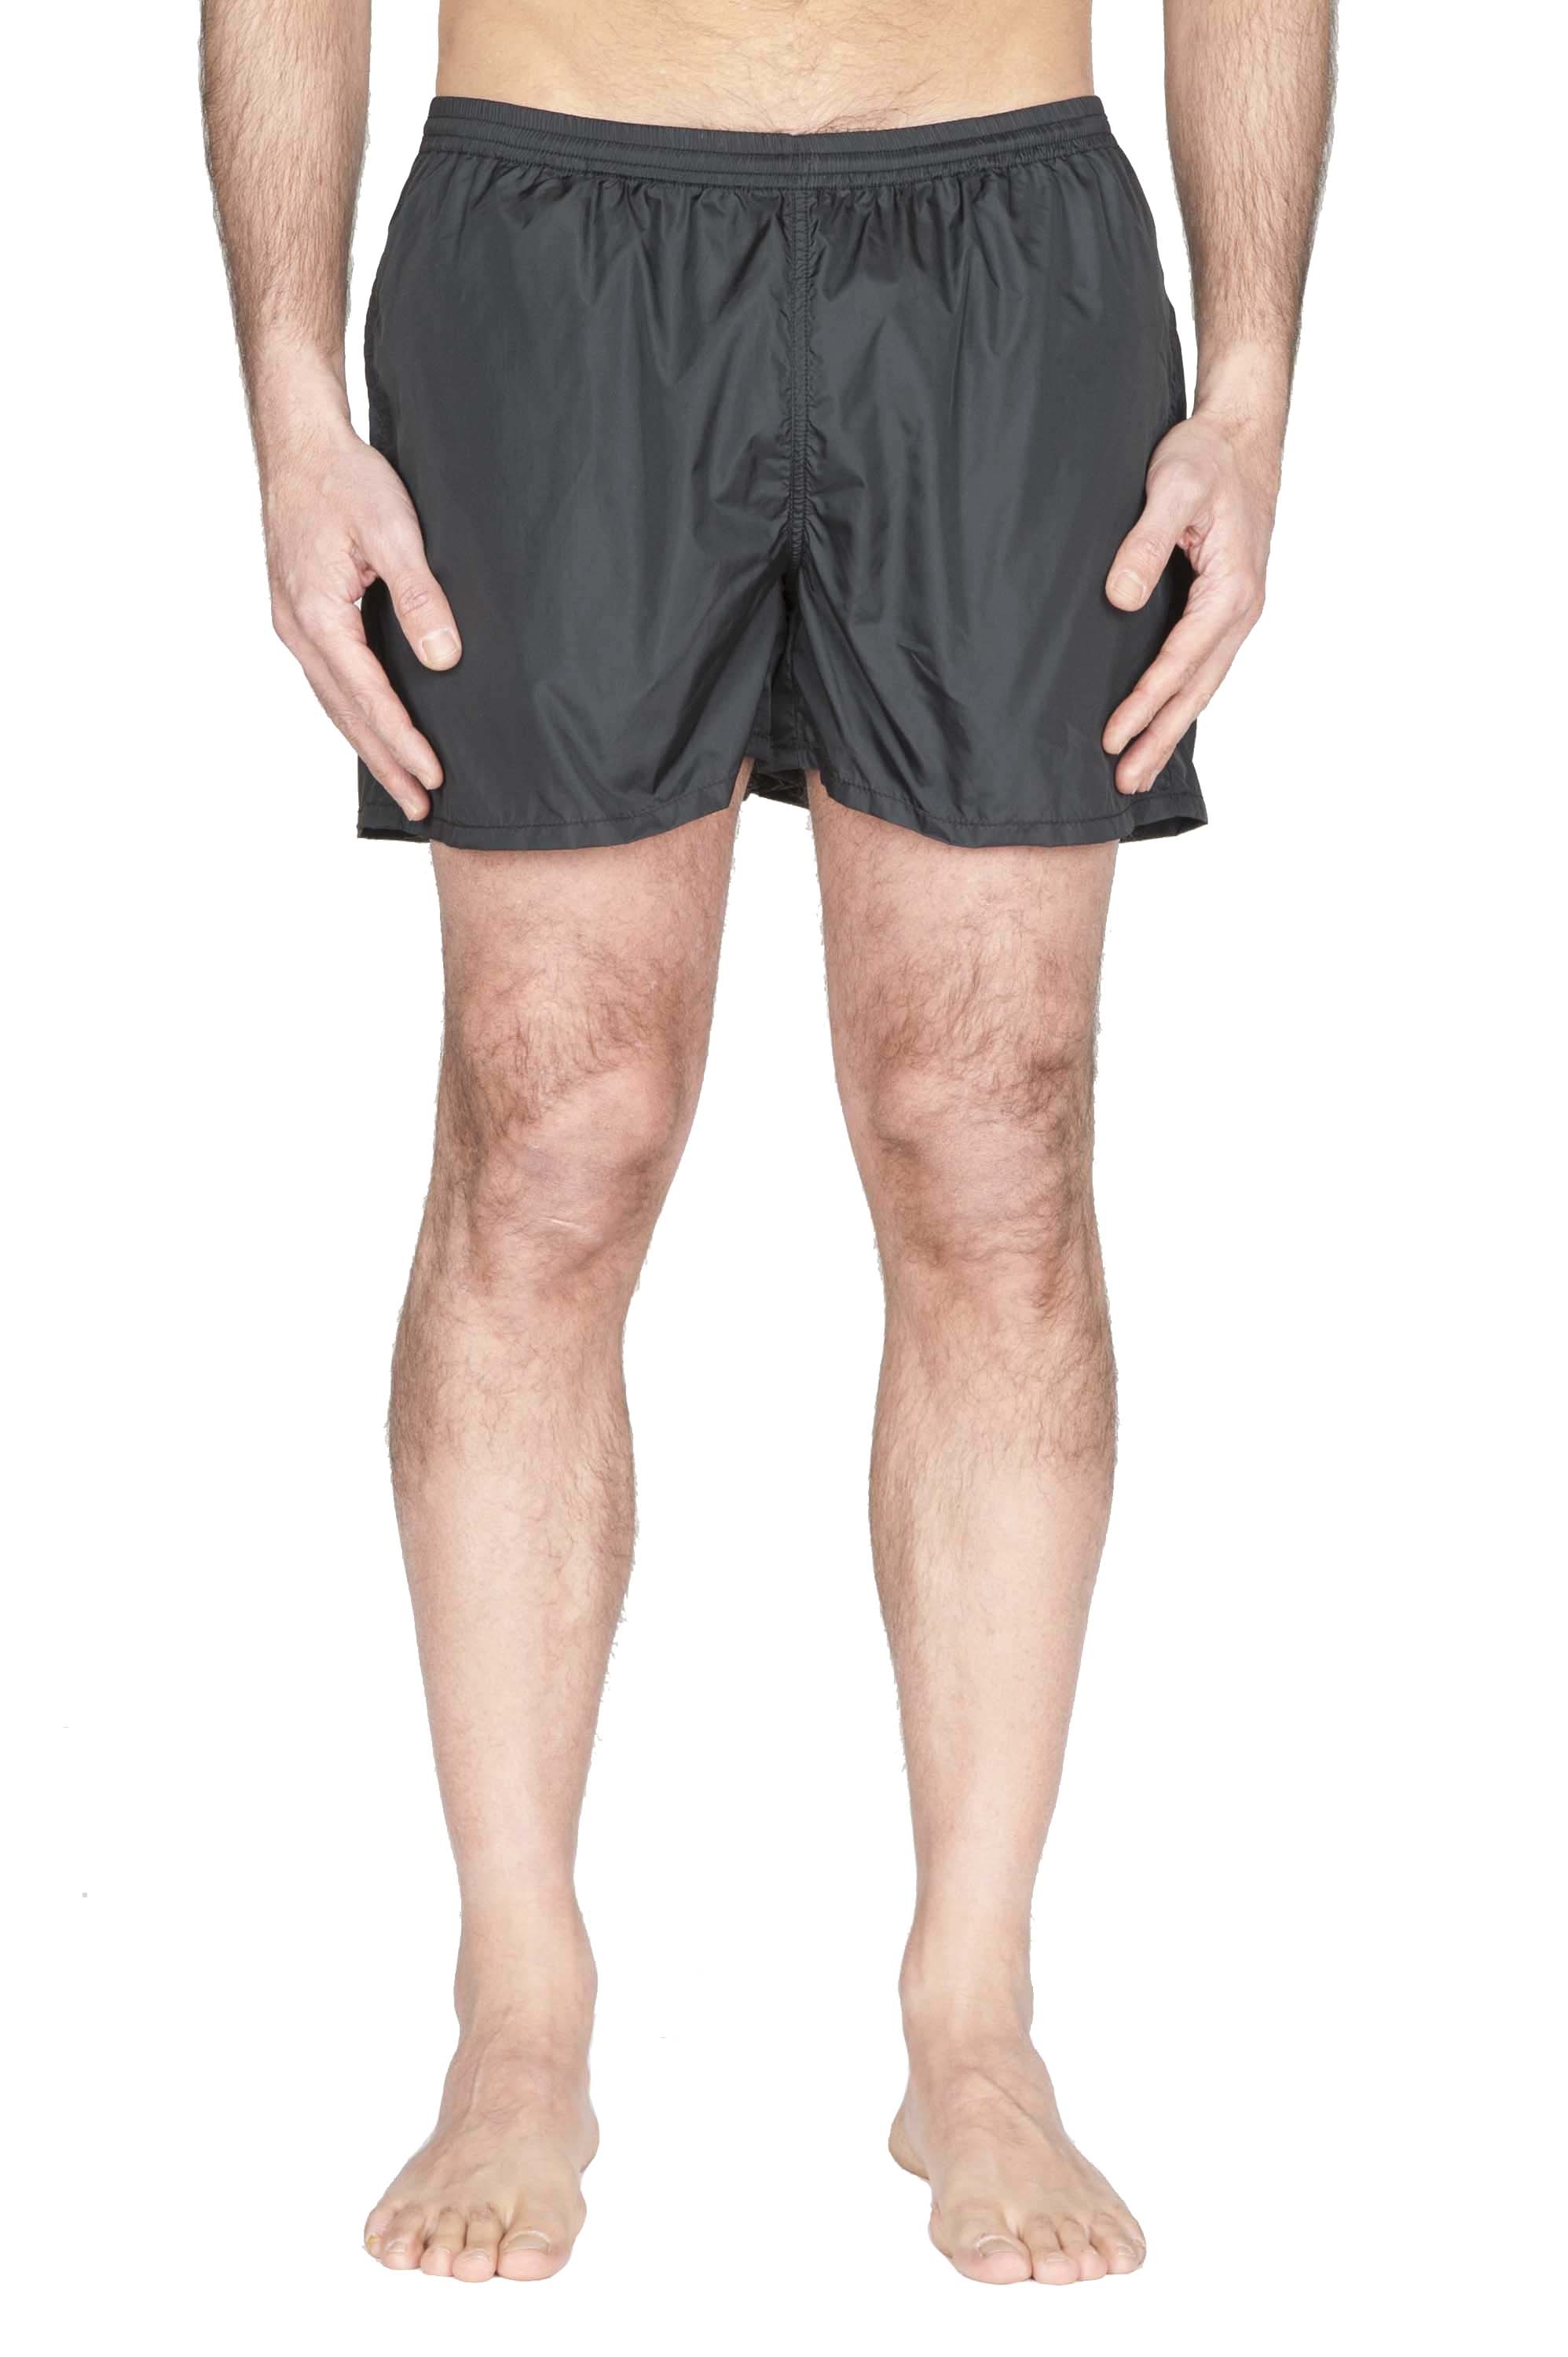 SBU 01753 Tactical swimsuit trunks in black ultra-lightweight nylon 01